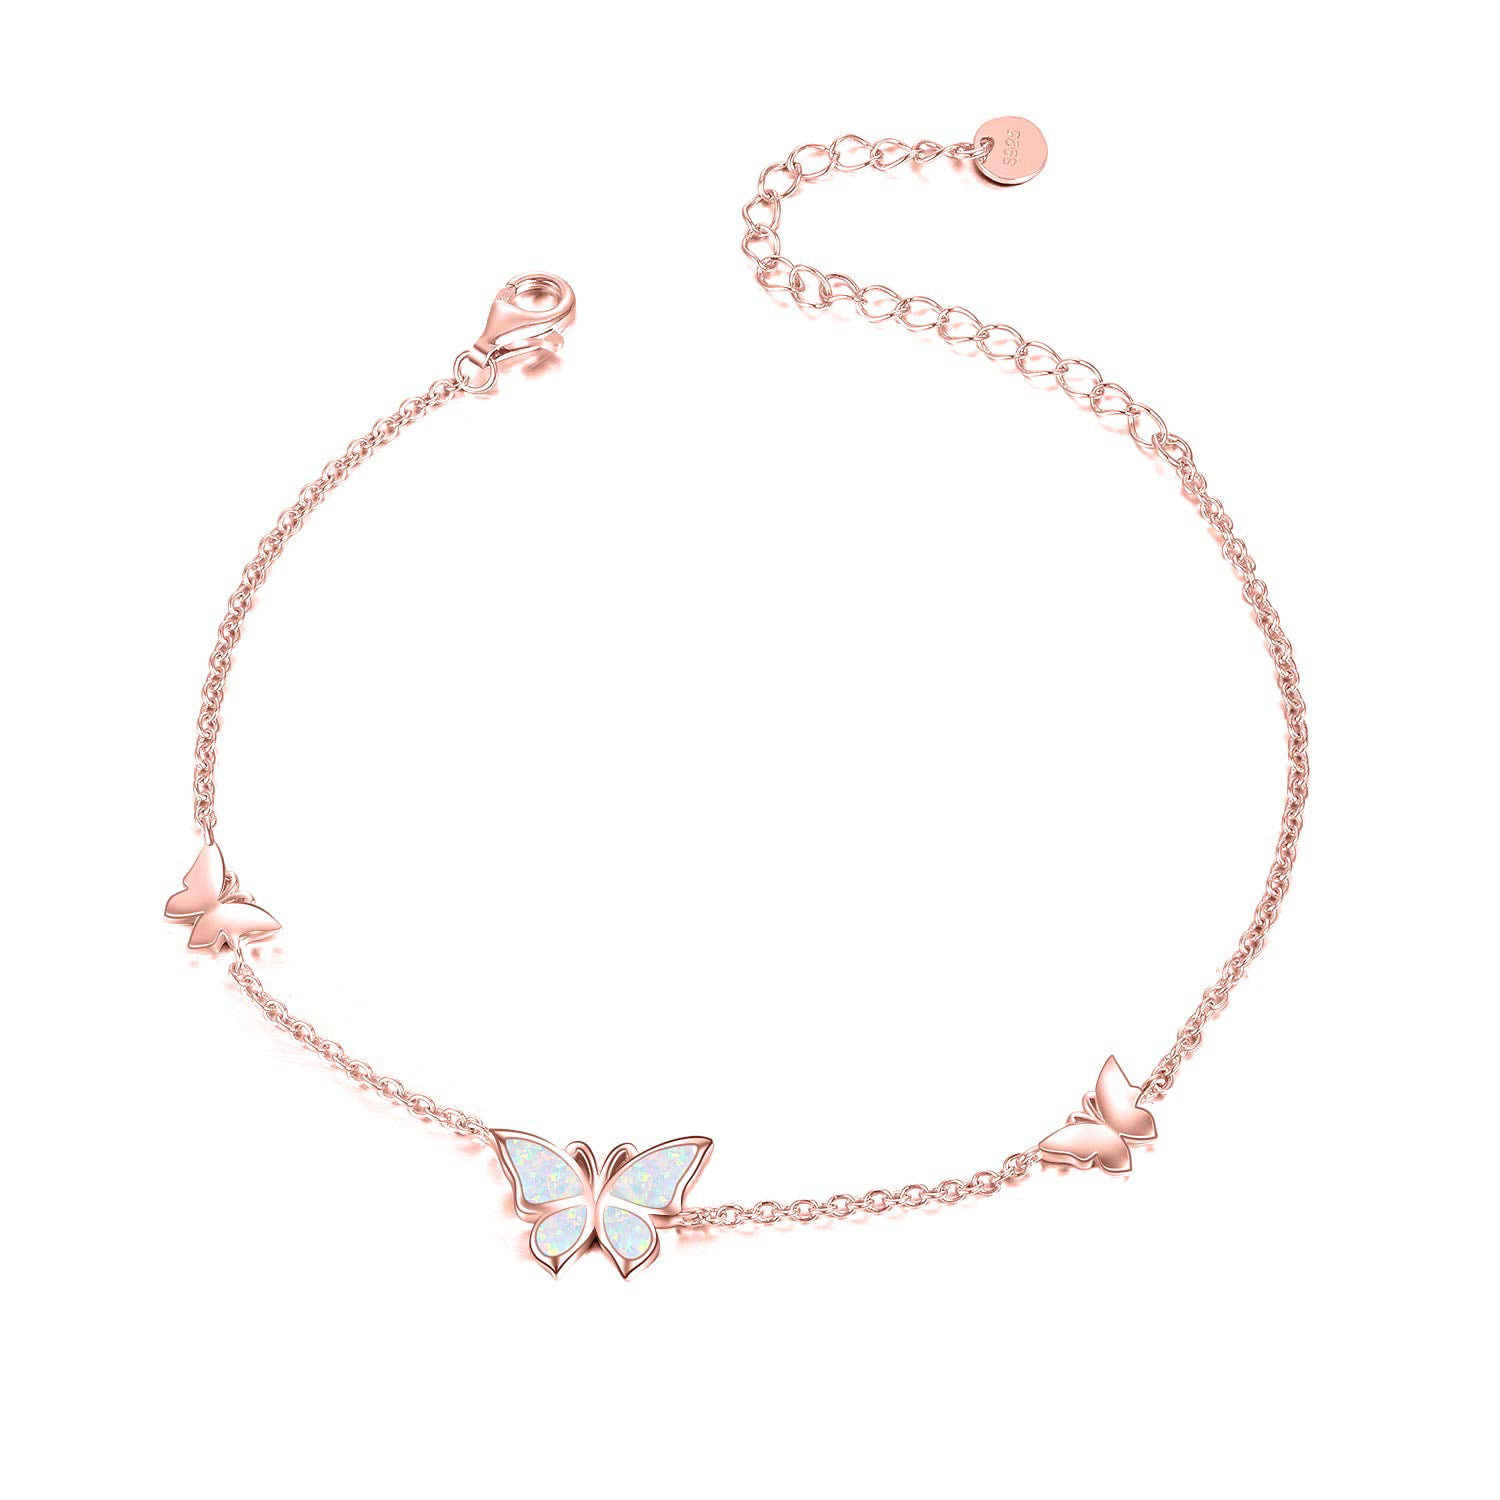 WINNICACA Sterling Silver Butterfly Bracelet Anklet Created Opal Butterfly Jewelry Gifts for Women Teens Birthday